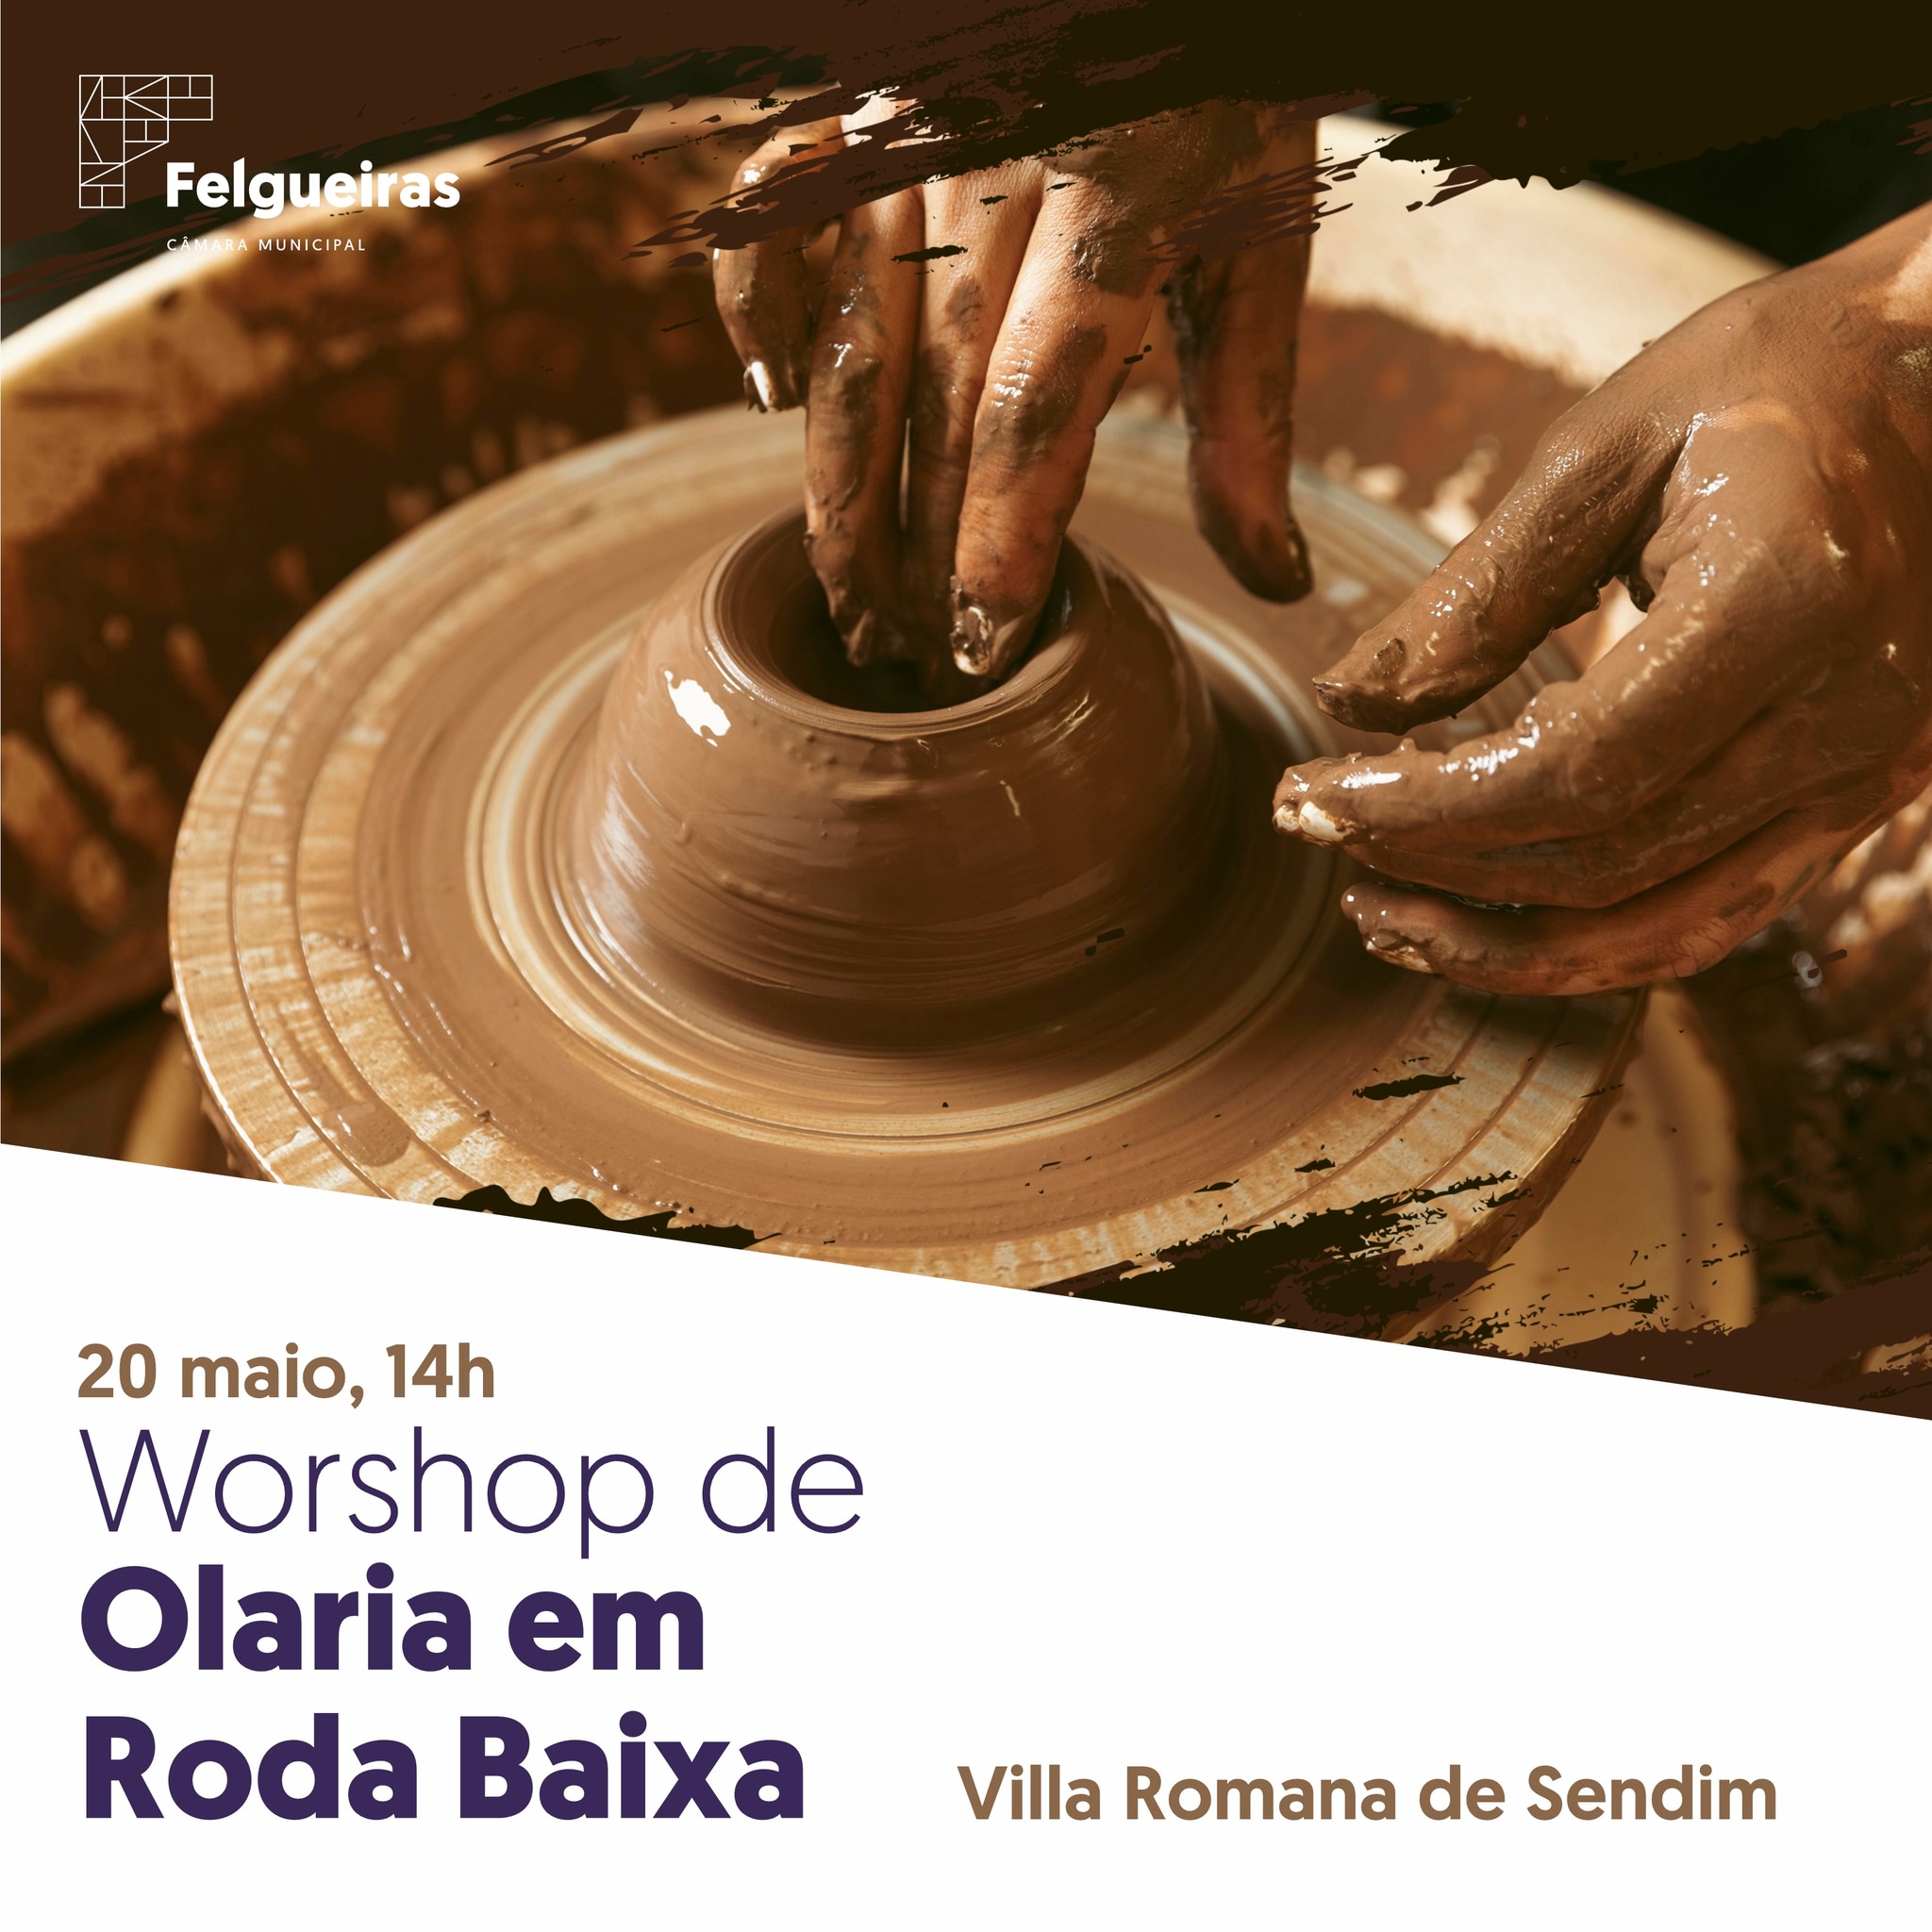 Workshop de Olaria em Roda Baixa